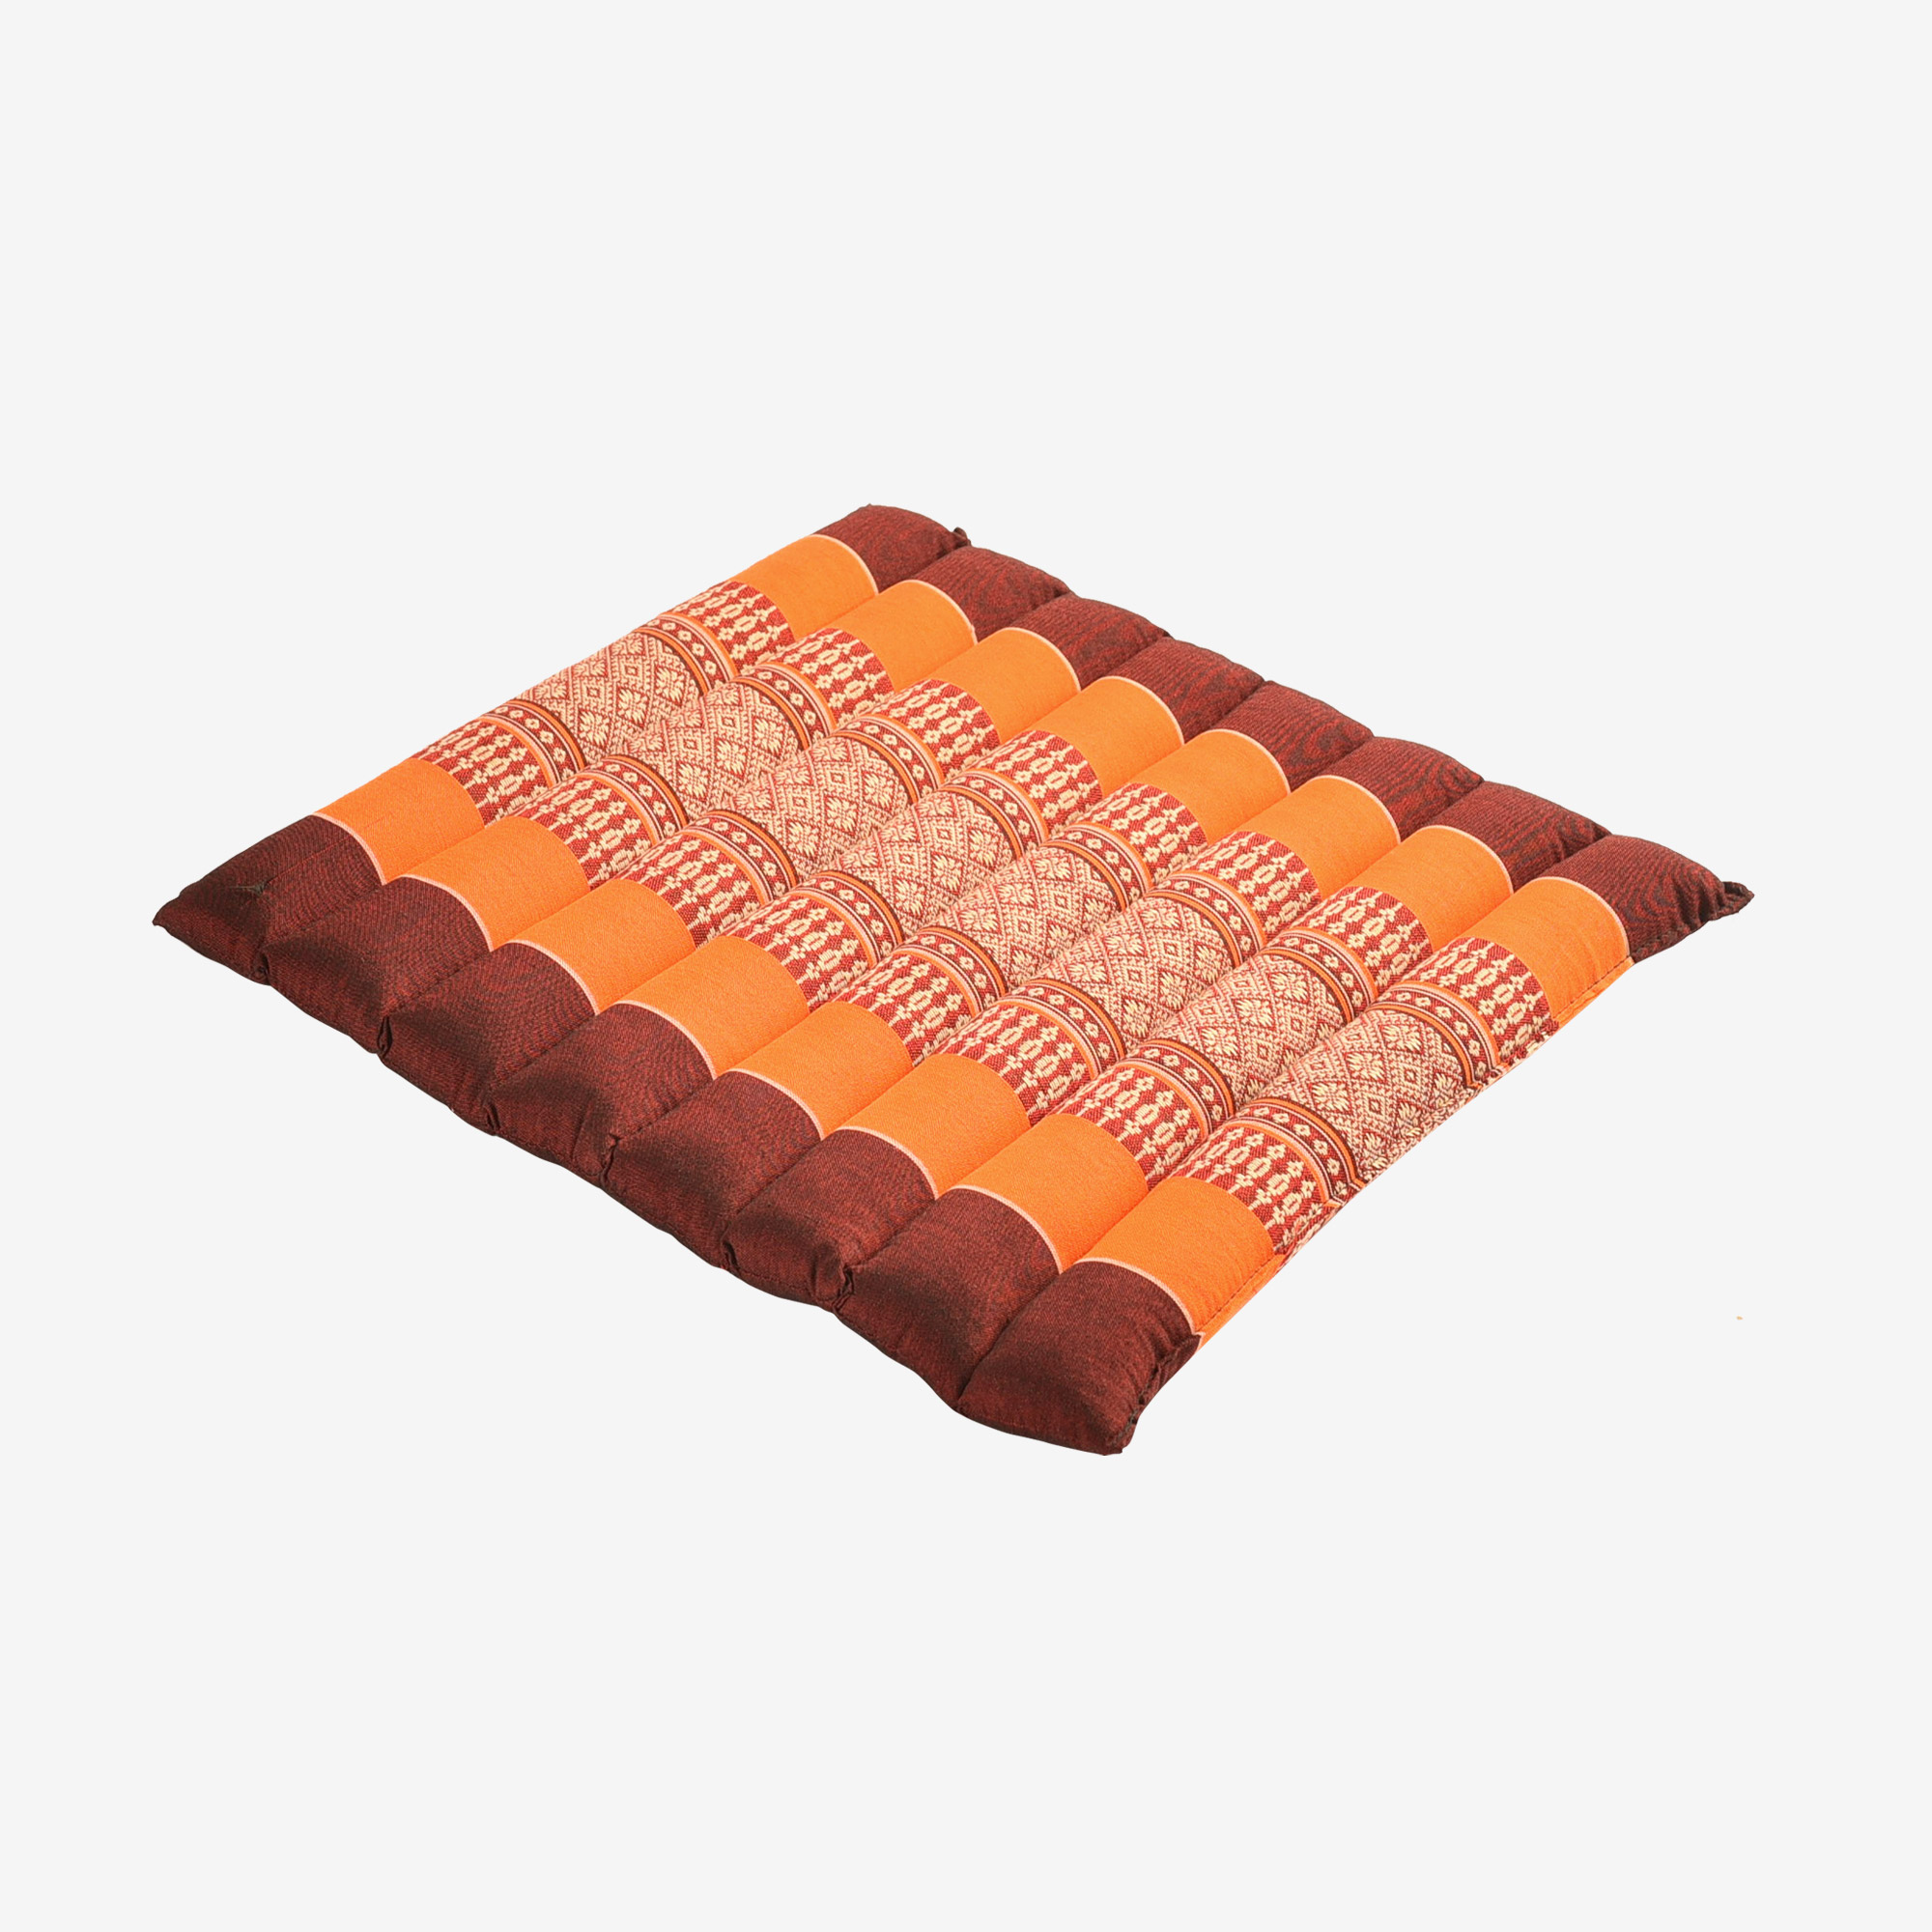 Zafuko Rollable Yoga & Meditation Cushion - Burgundy/Orange